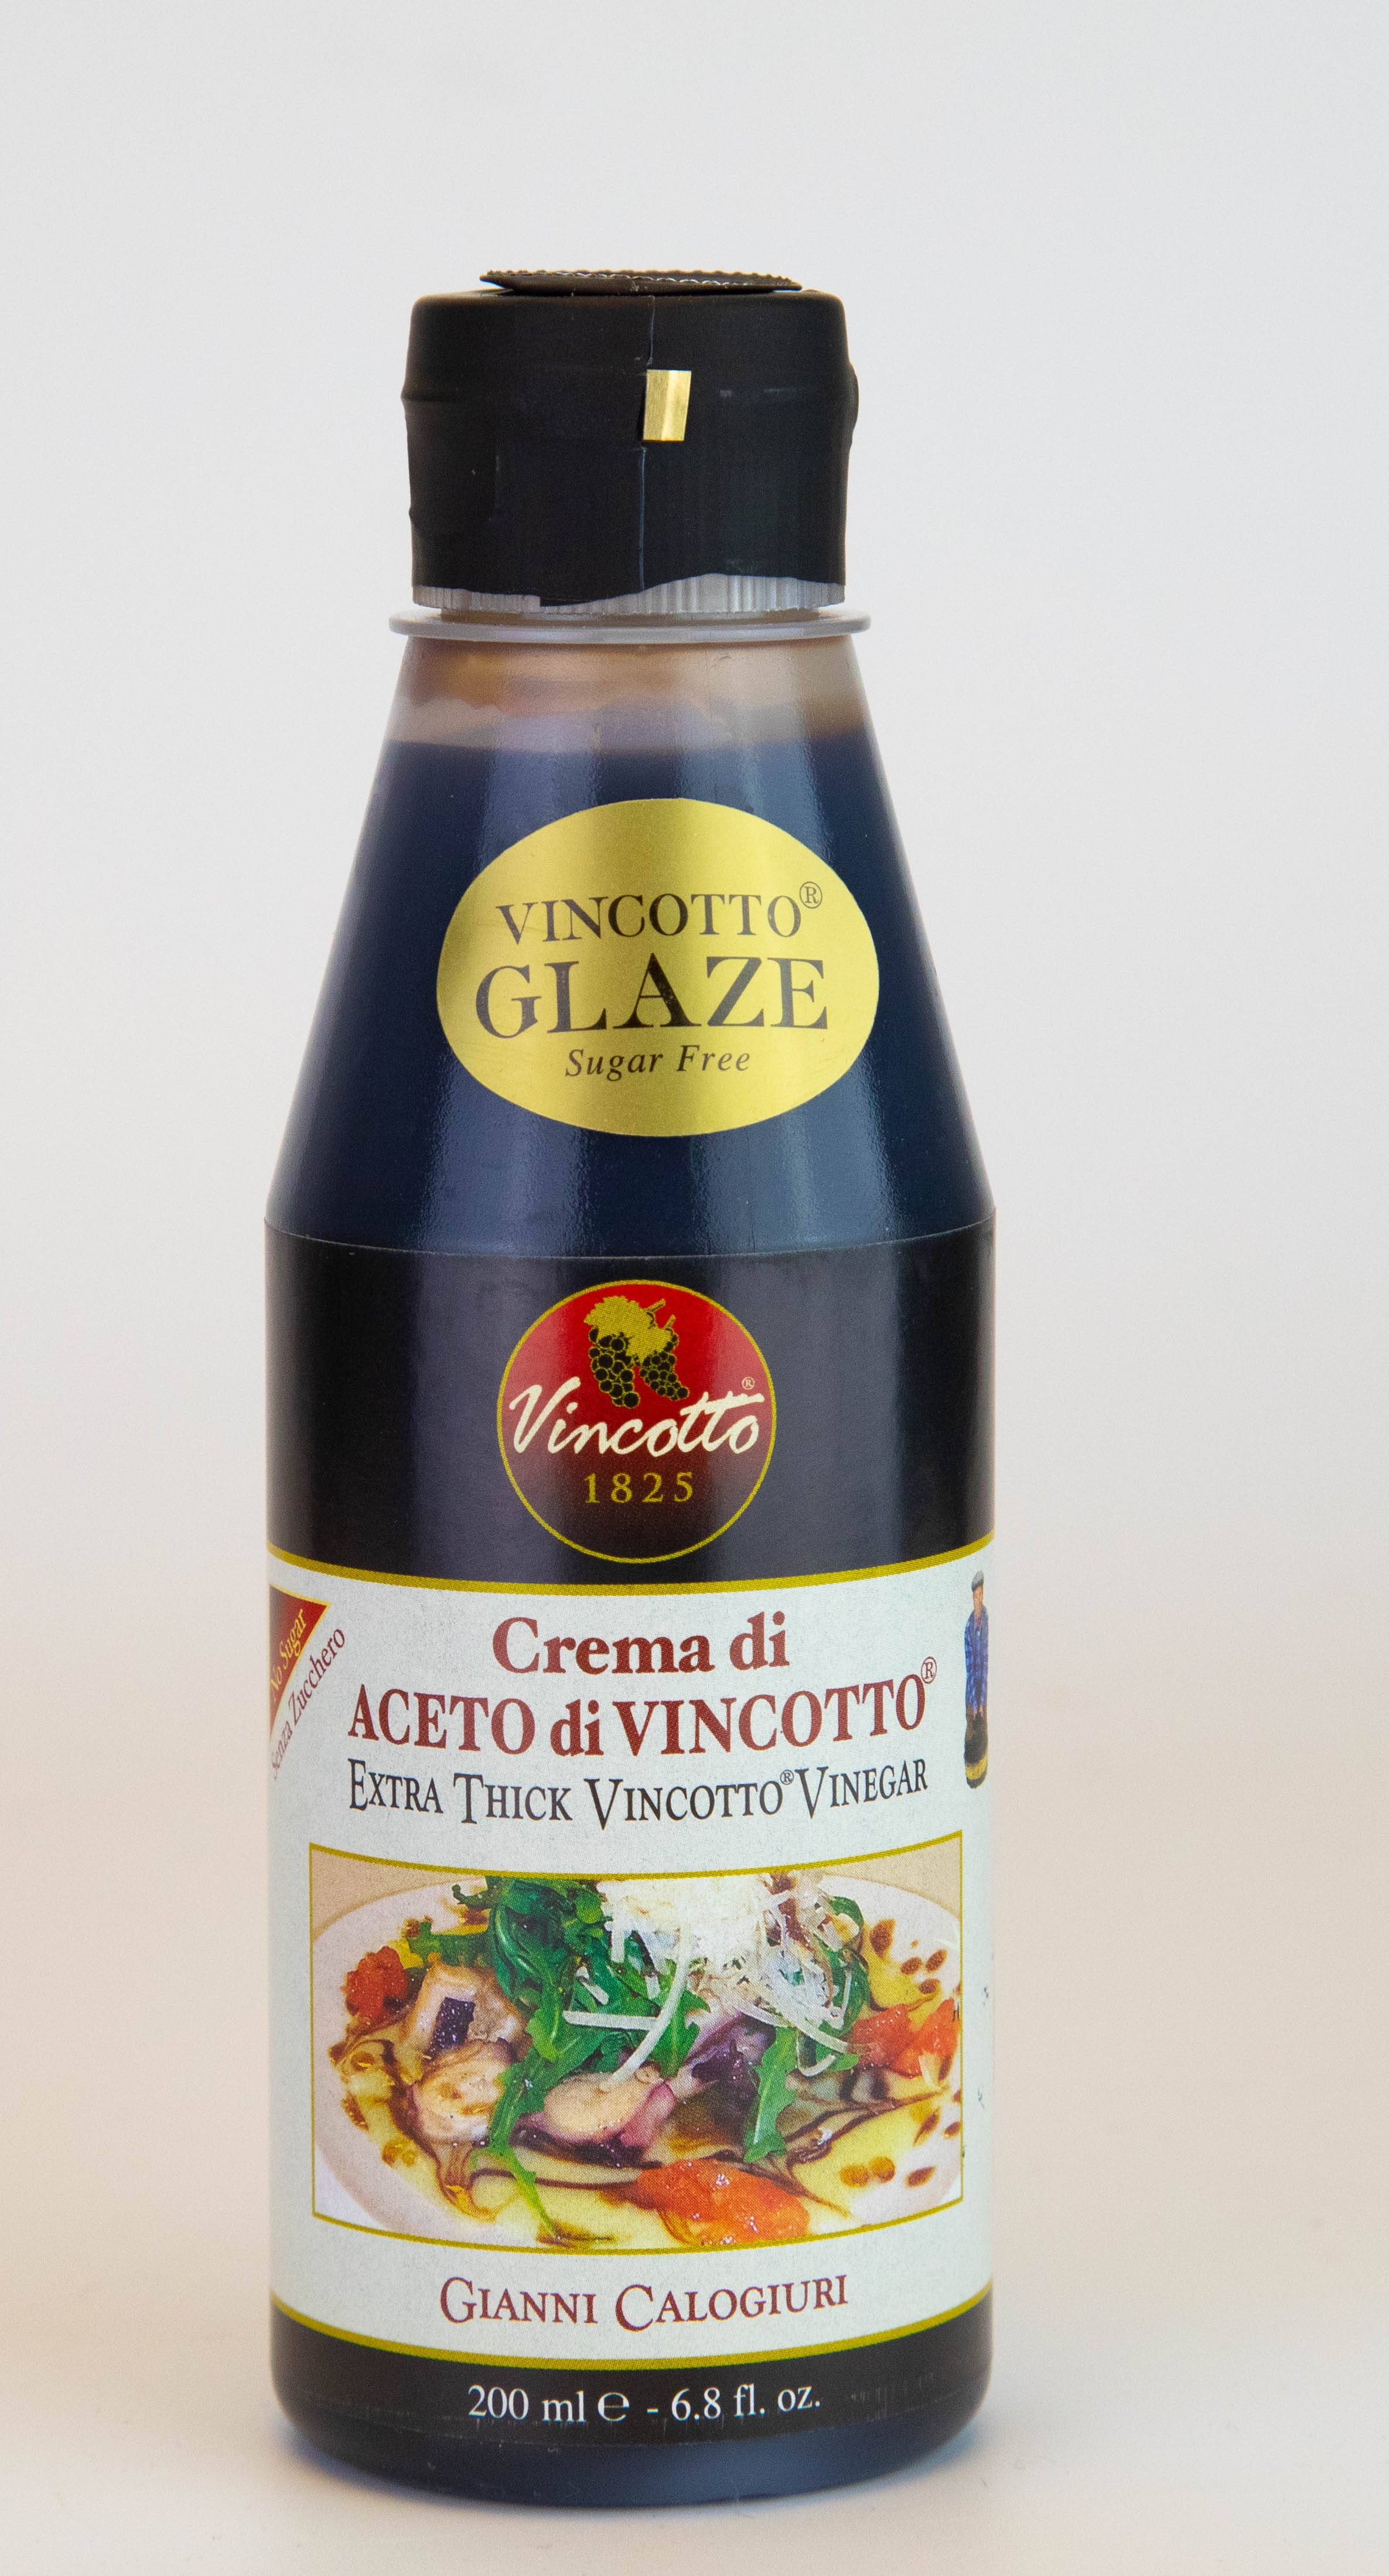 Crema de Aceto di Vincotto en botella de 200ml.